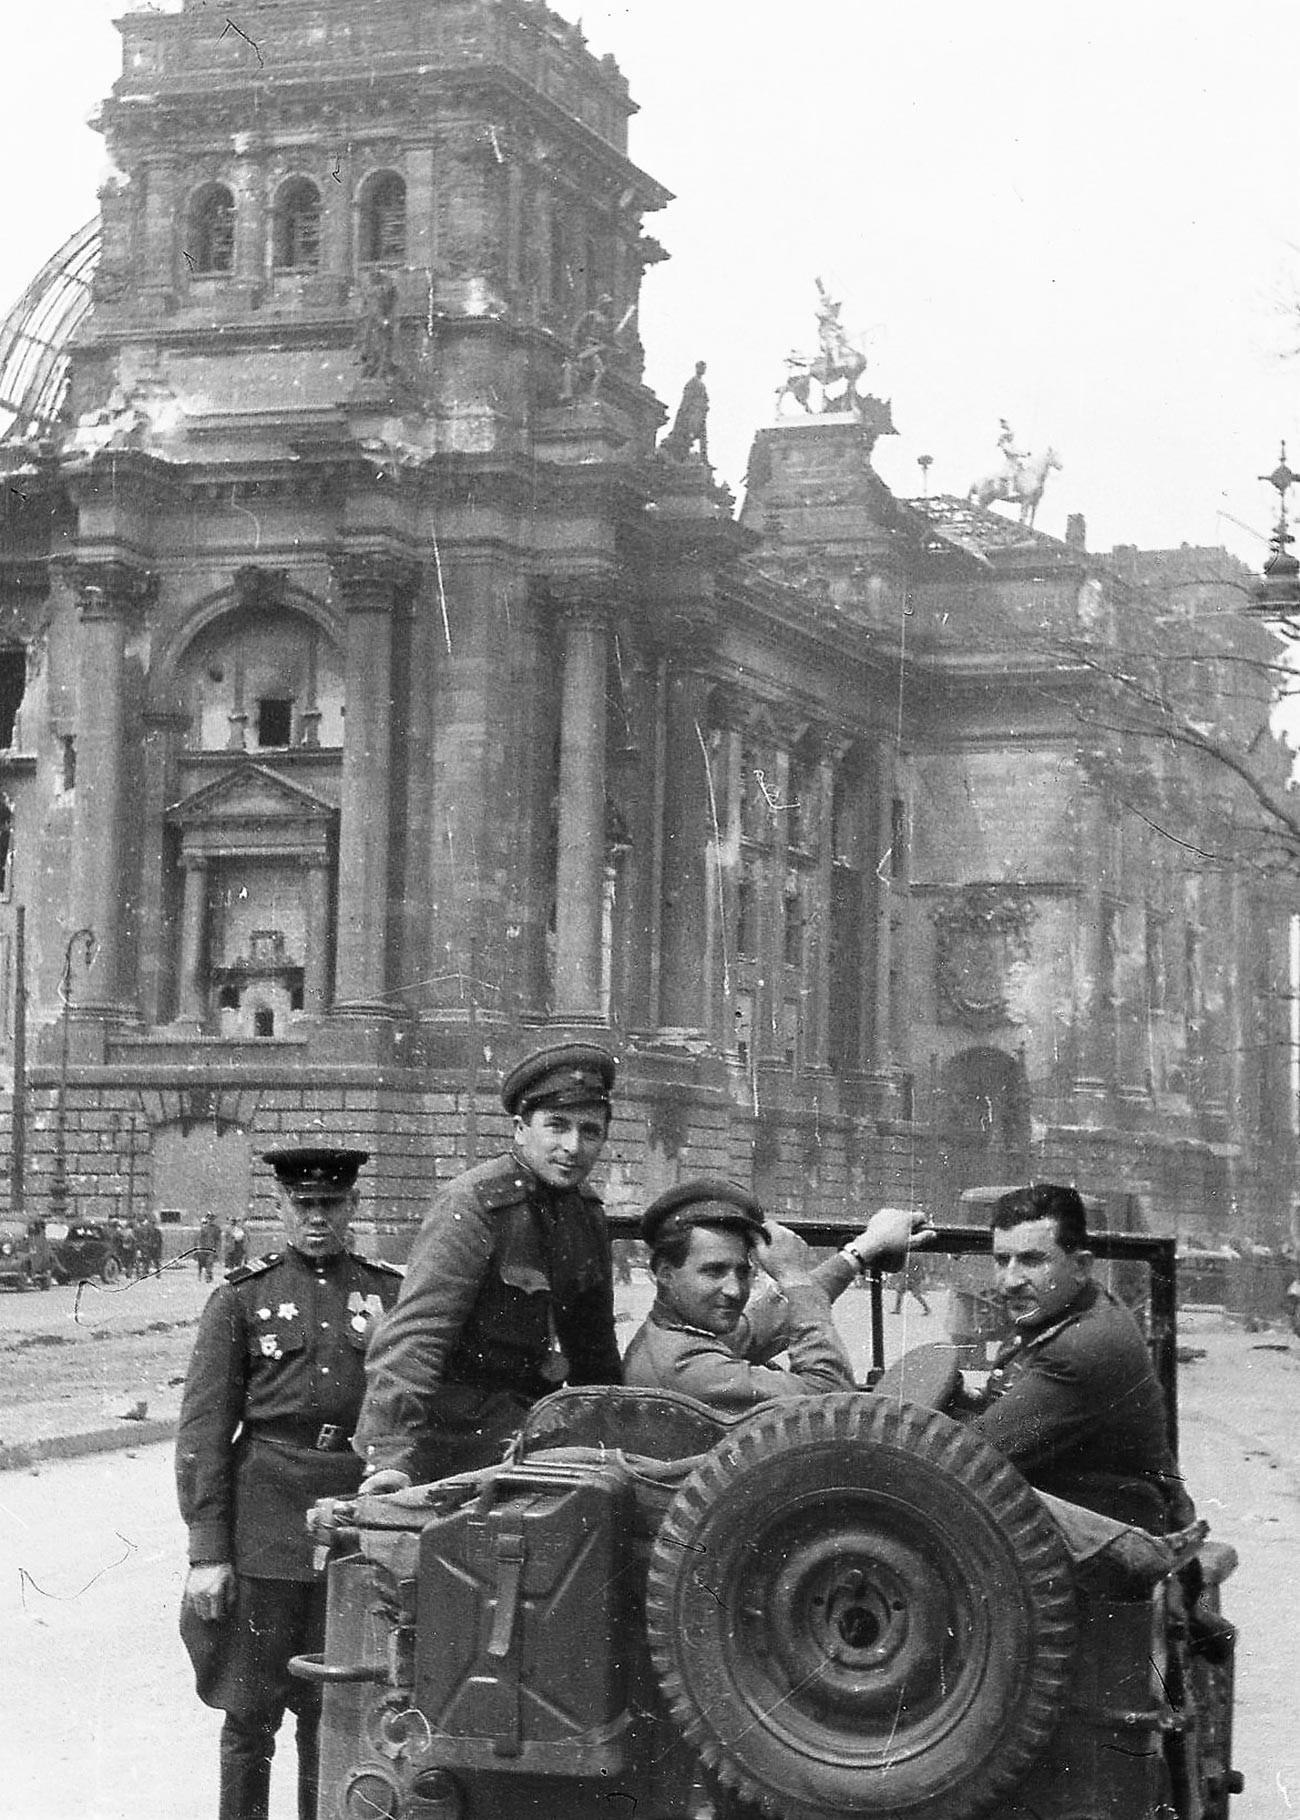 Ilya Arons. From left to right: General-Major Matvey Vayntrub, writer Konstantin Simonov, videographer Ilya Arons. At the building of the Reichstag, Berlin, 1945